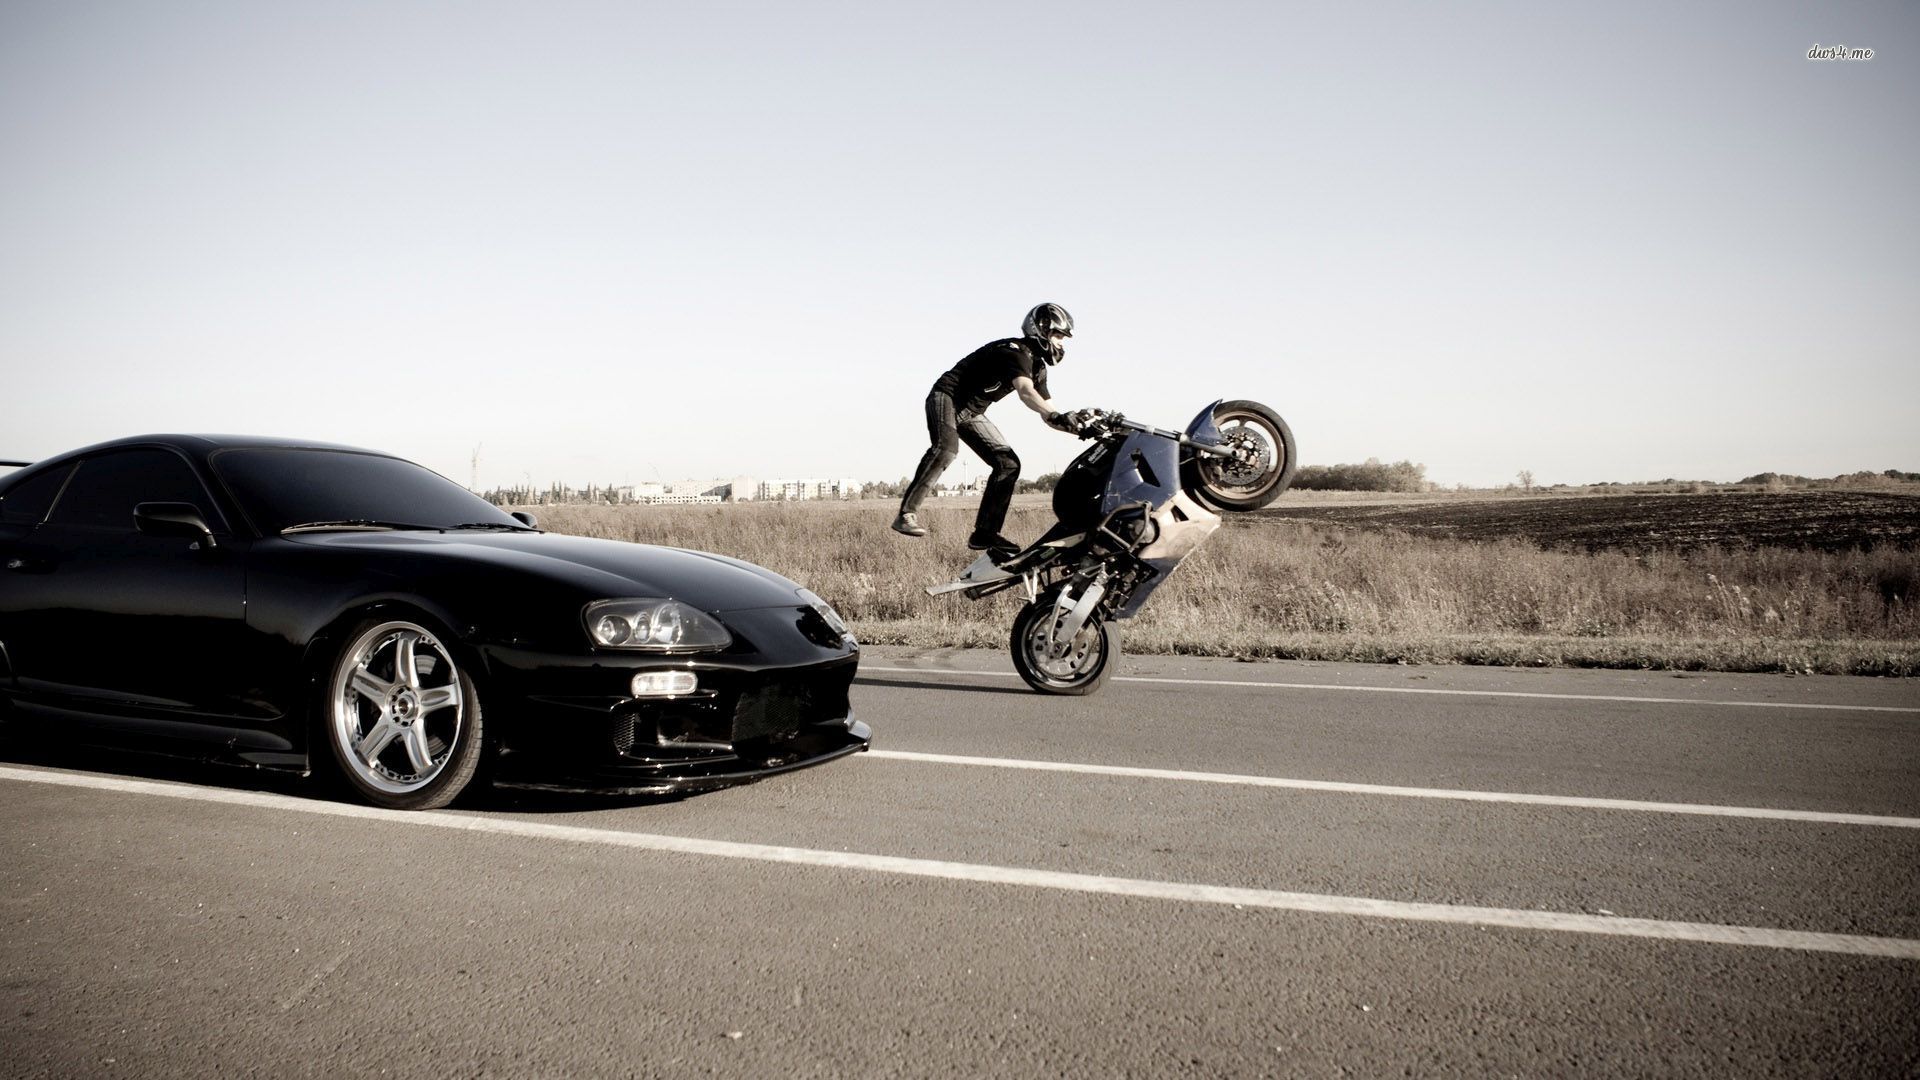 Motorcycle Stunt Riding Wallpaper